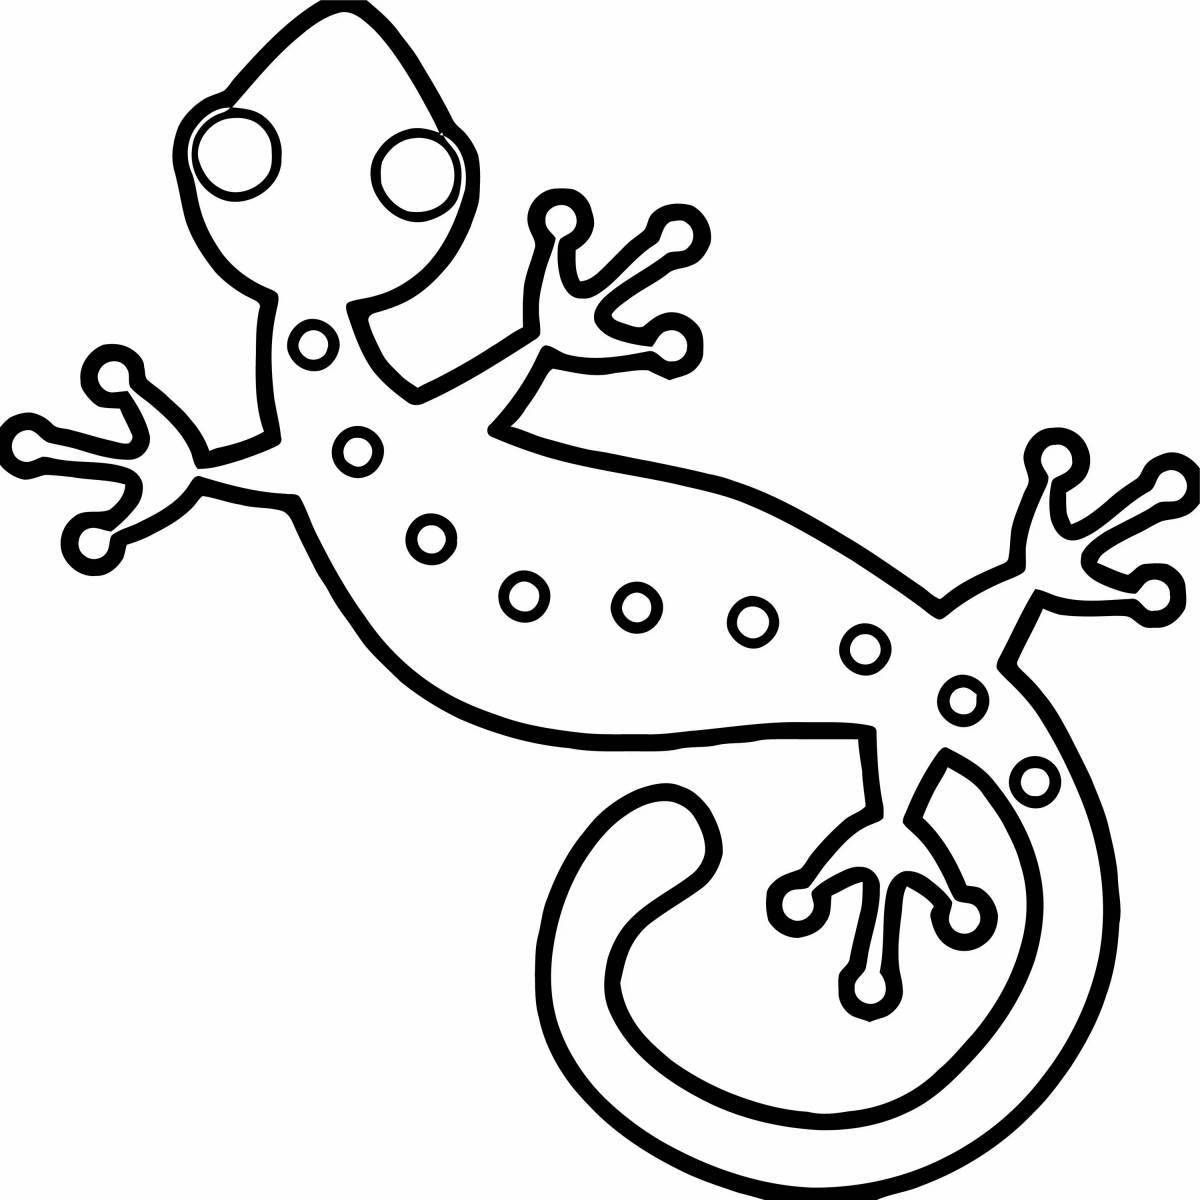 Coloring book shining gecko